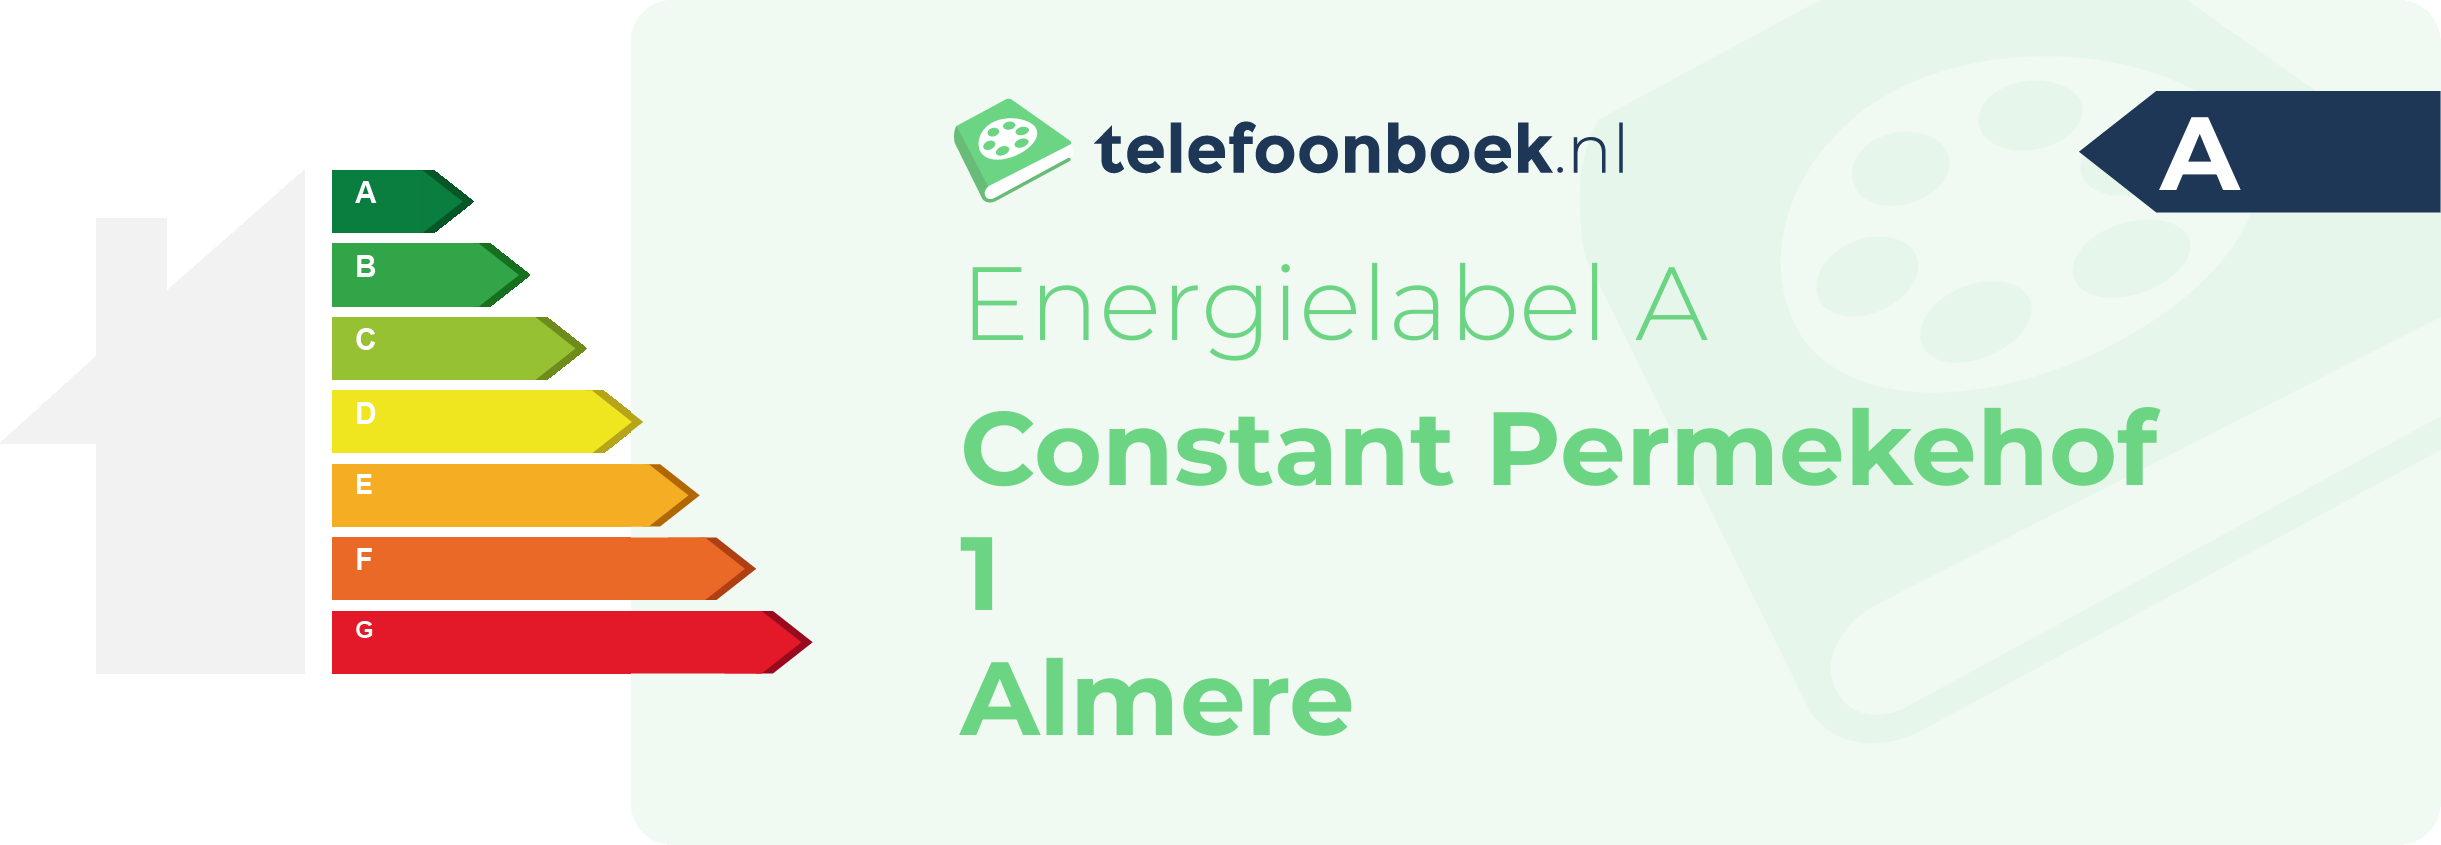 Energielabel Constant Permekehof 1 Almere